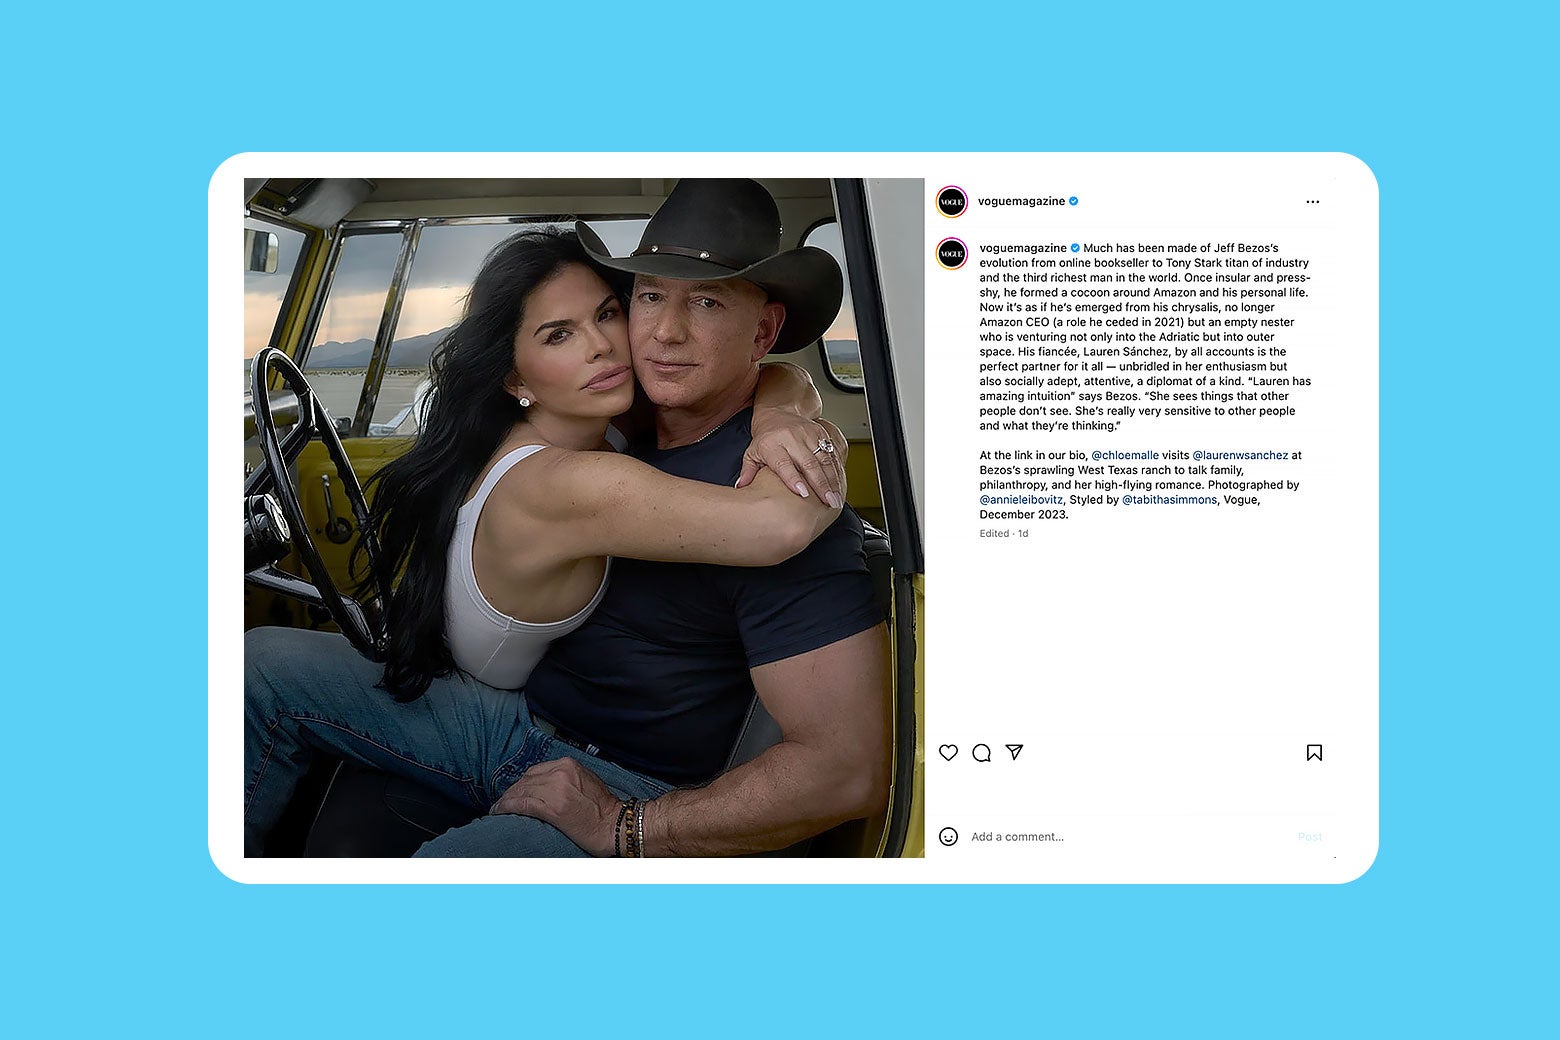 Jeff Bezos and Lauren Sanchez in the infamous Texas ranch cowboy hat photo for Vogue, on Vogue's Instagram. 